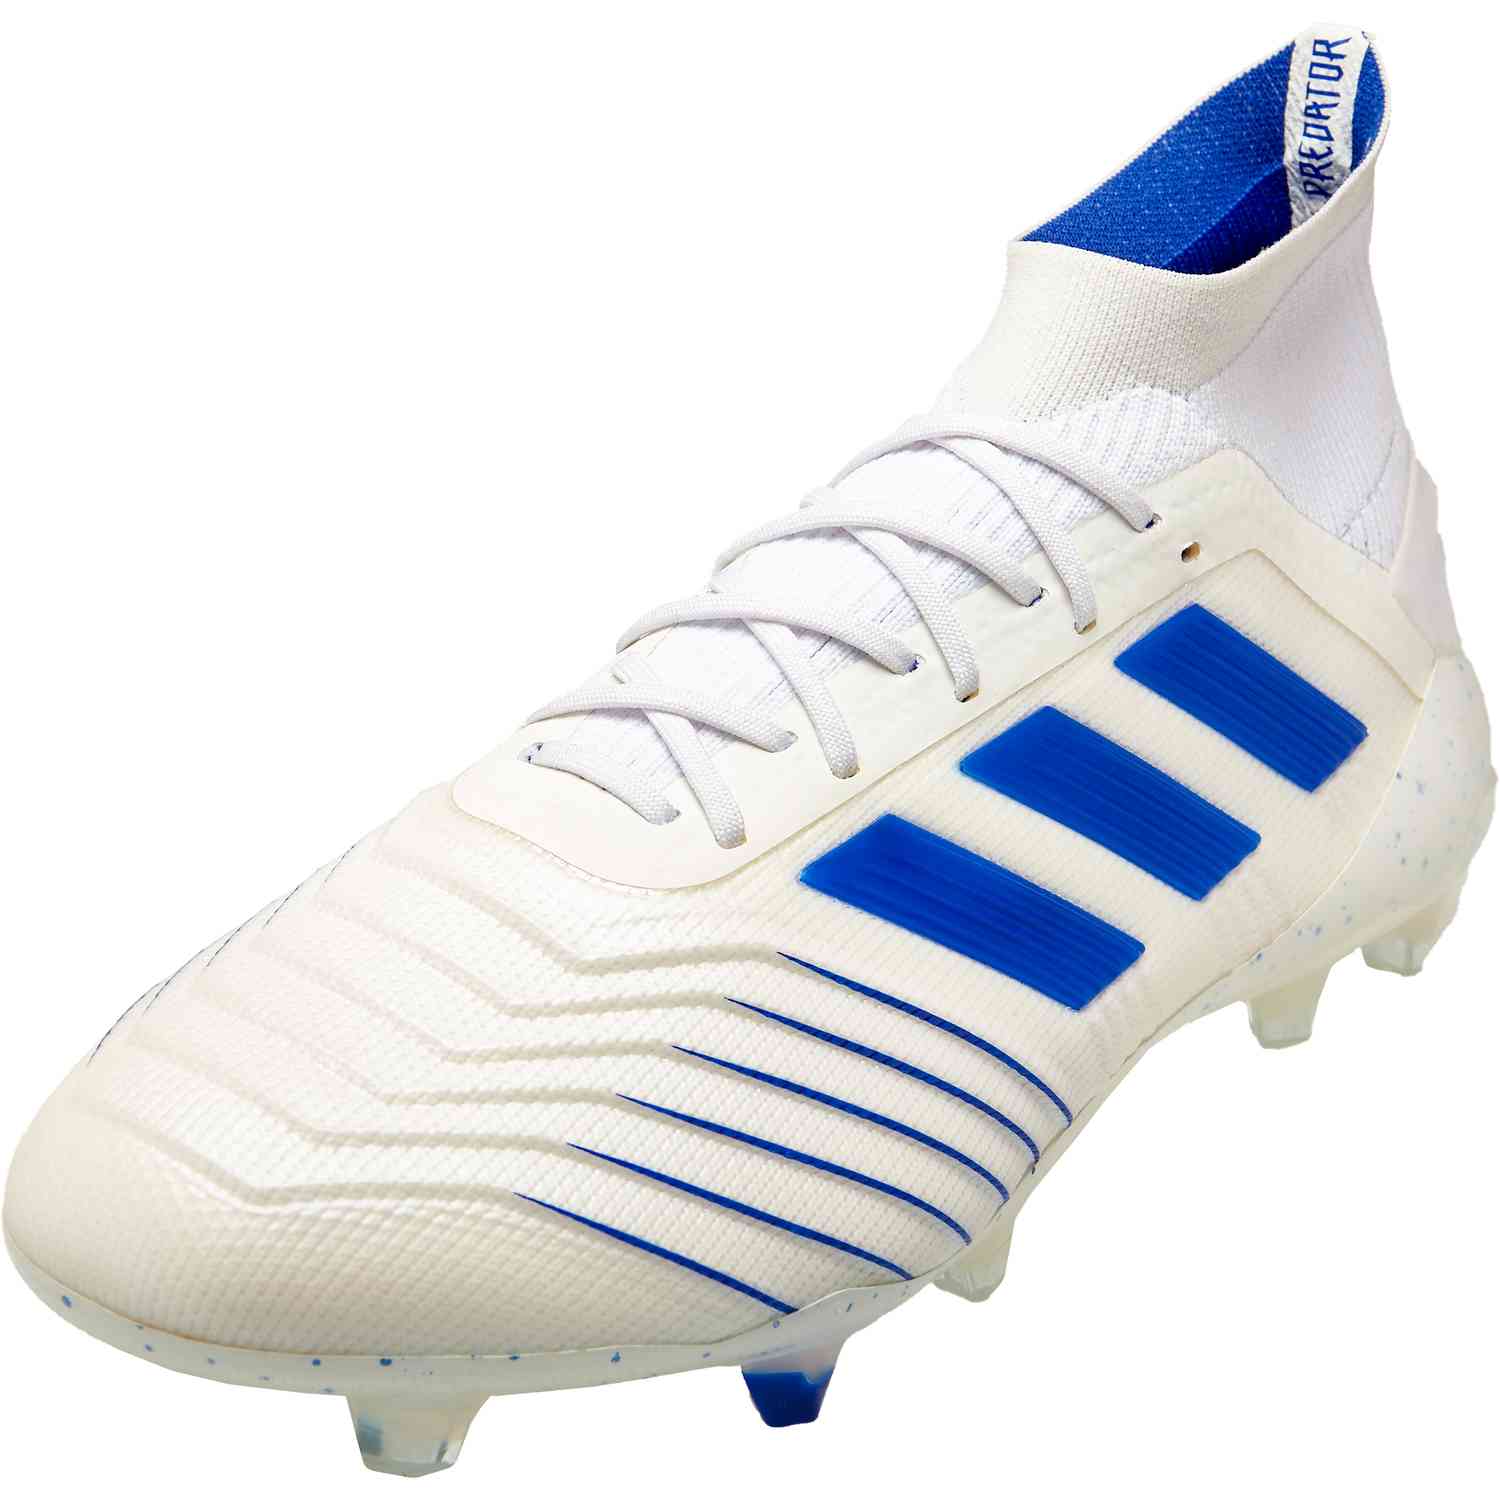 adidas predator 19.1 white and blue